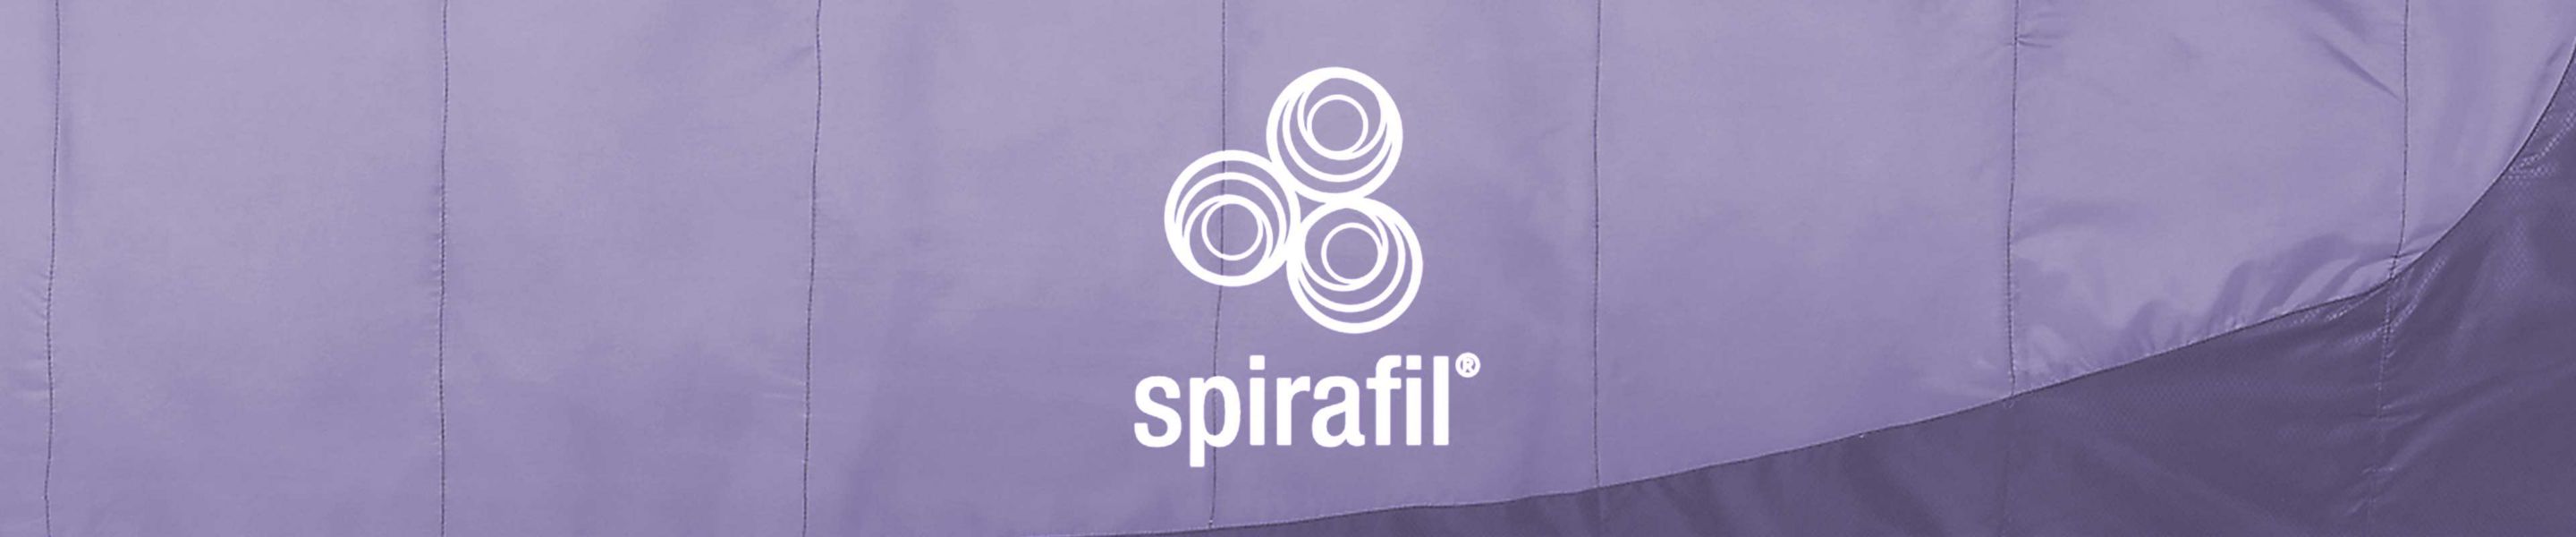 Spirafil logo